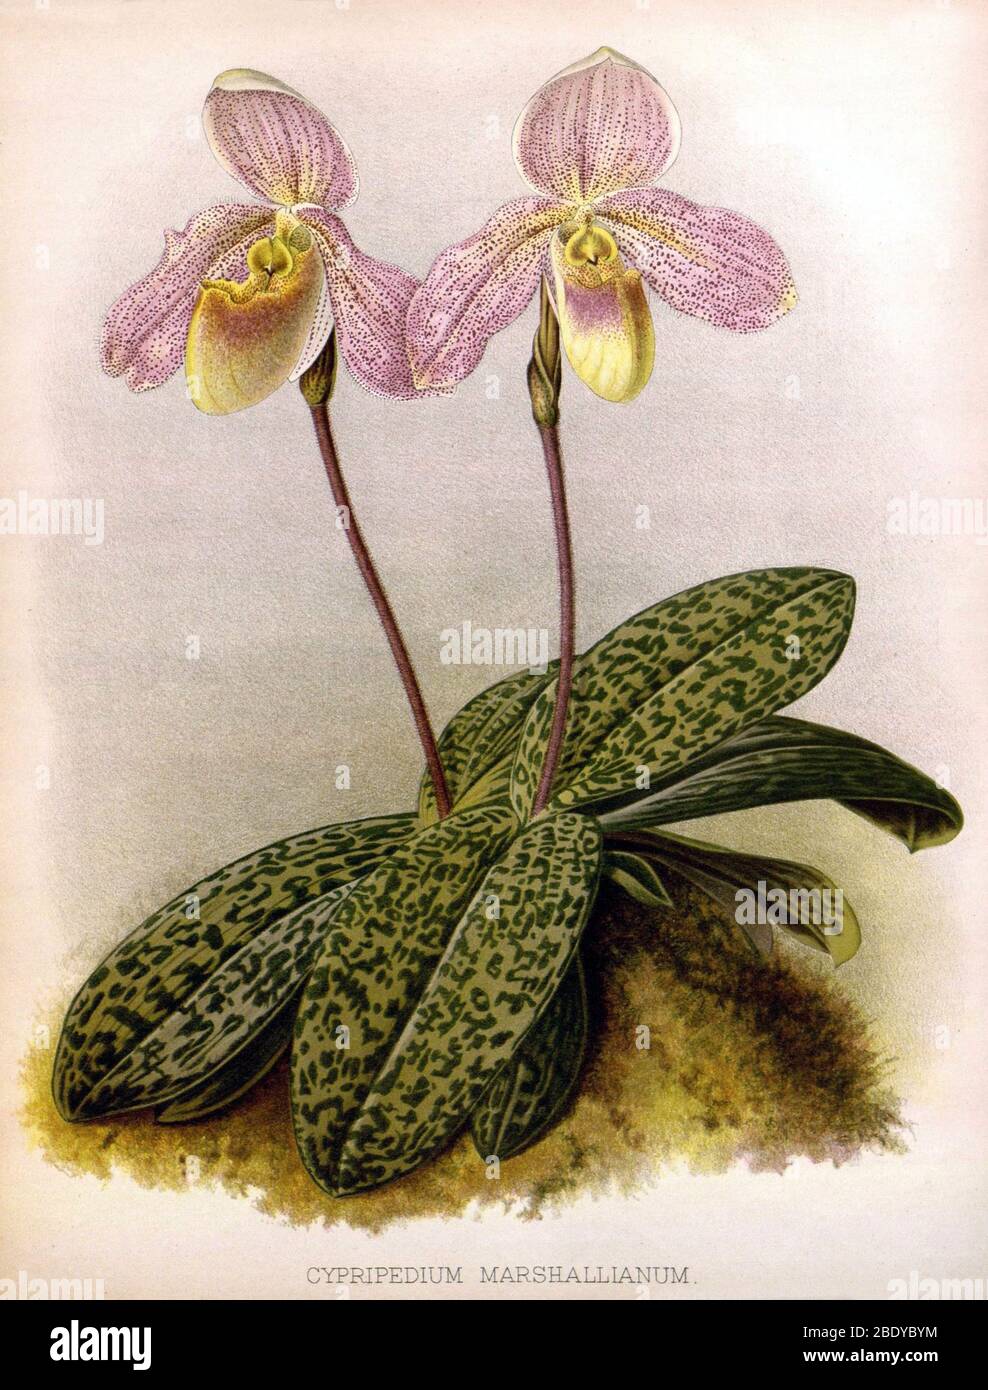 Orchid, Cypripedium marshallianum, 1891 Stock Photo